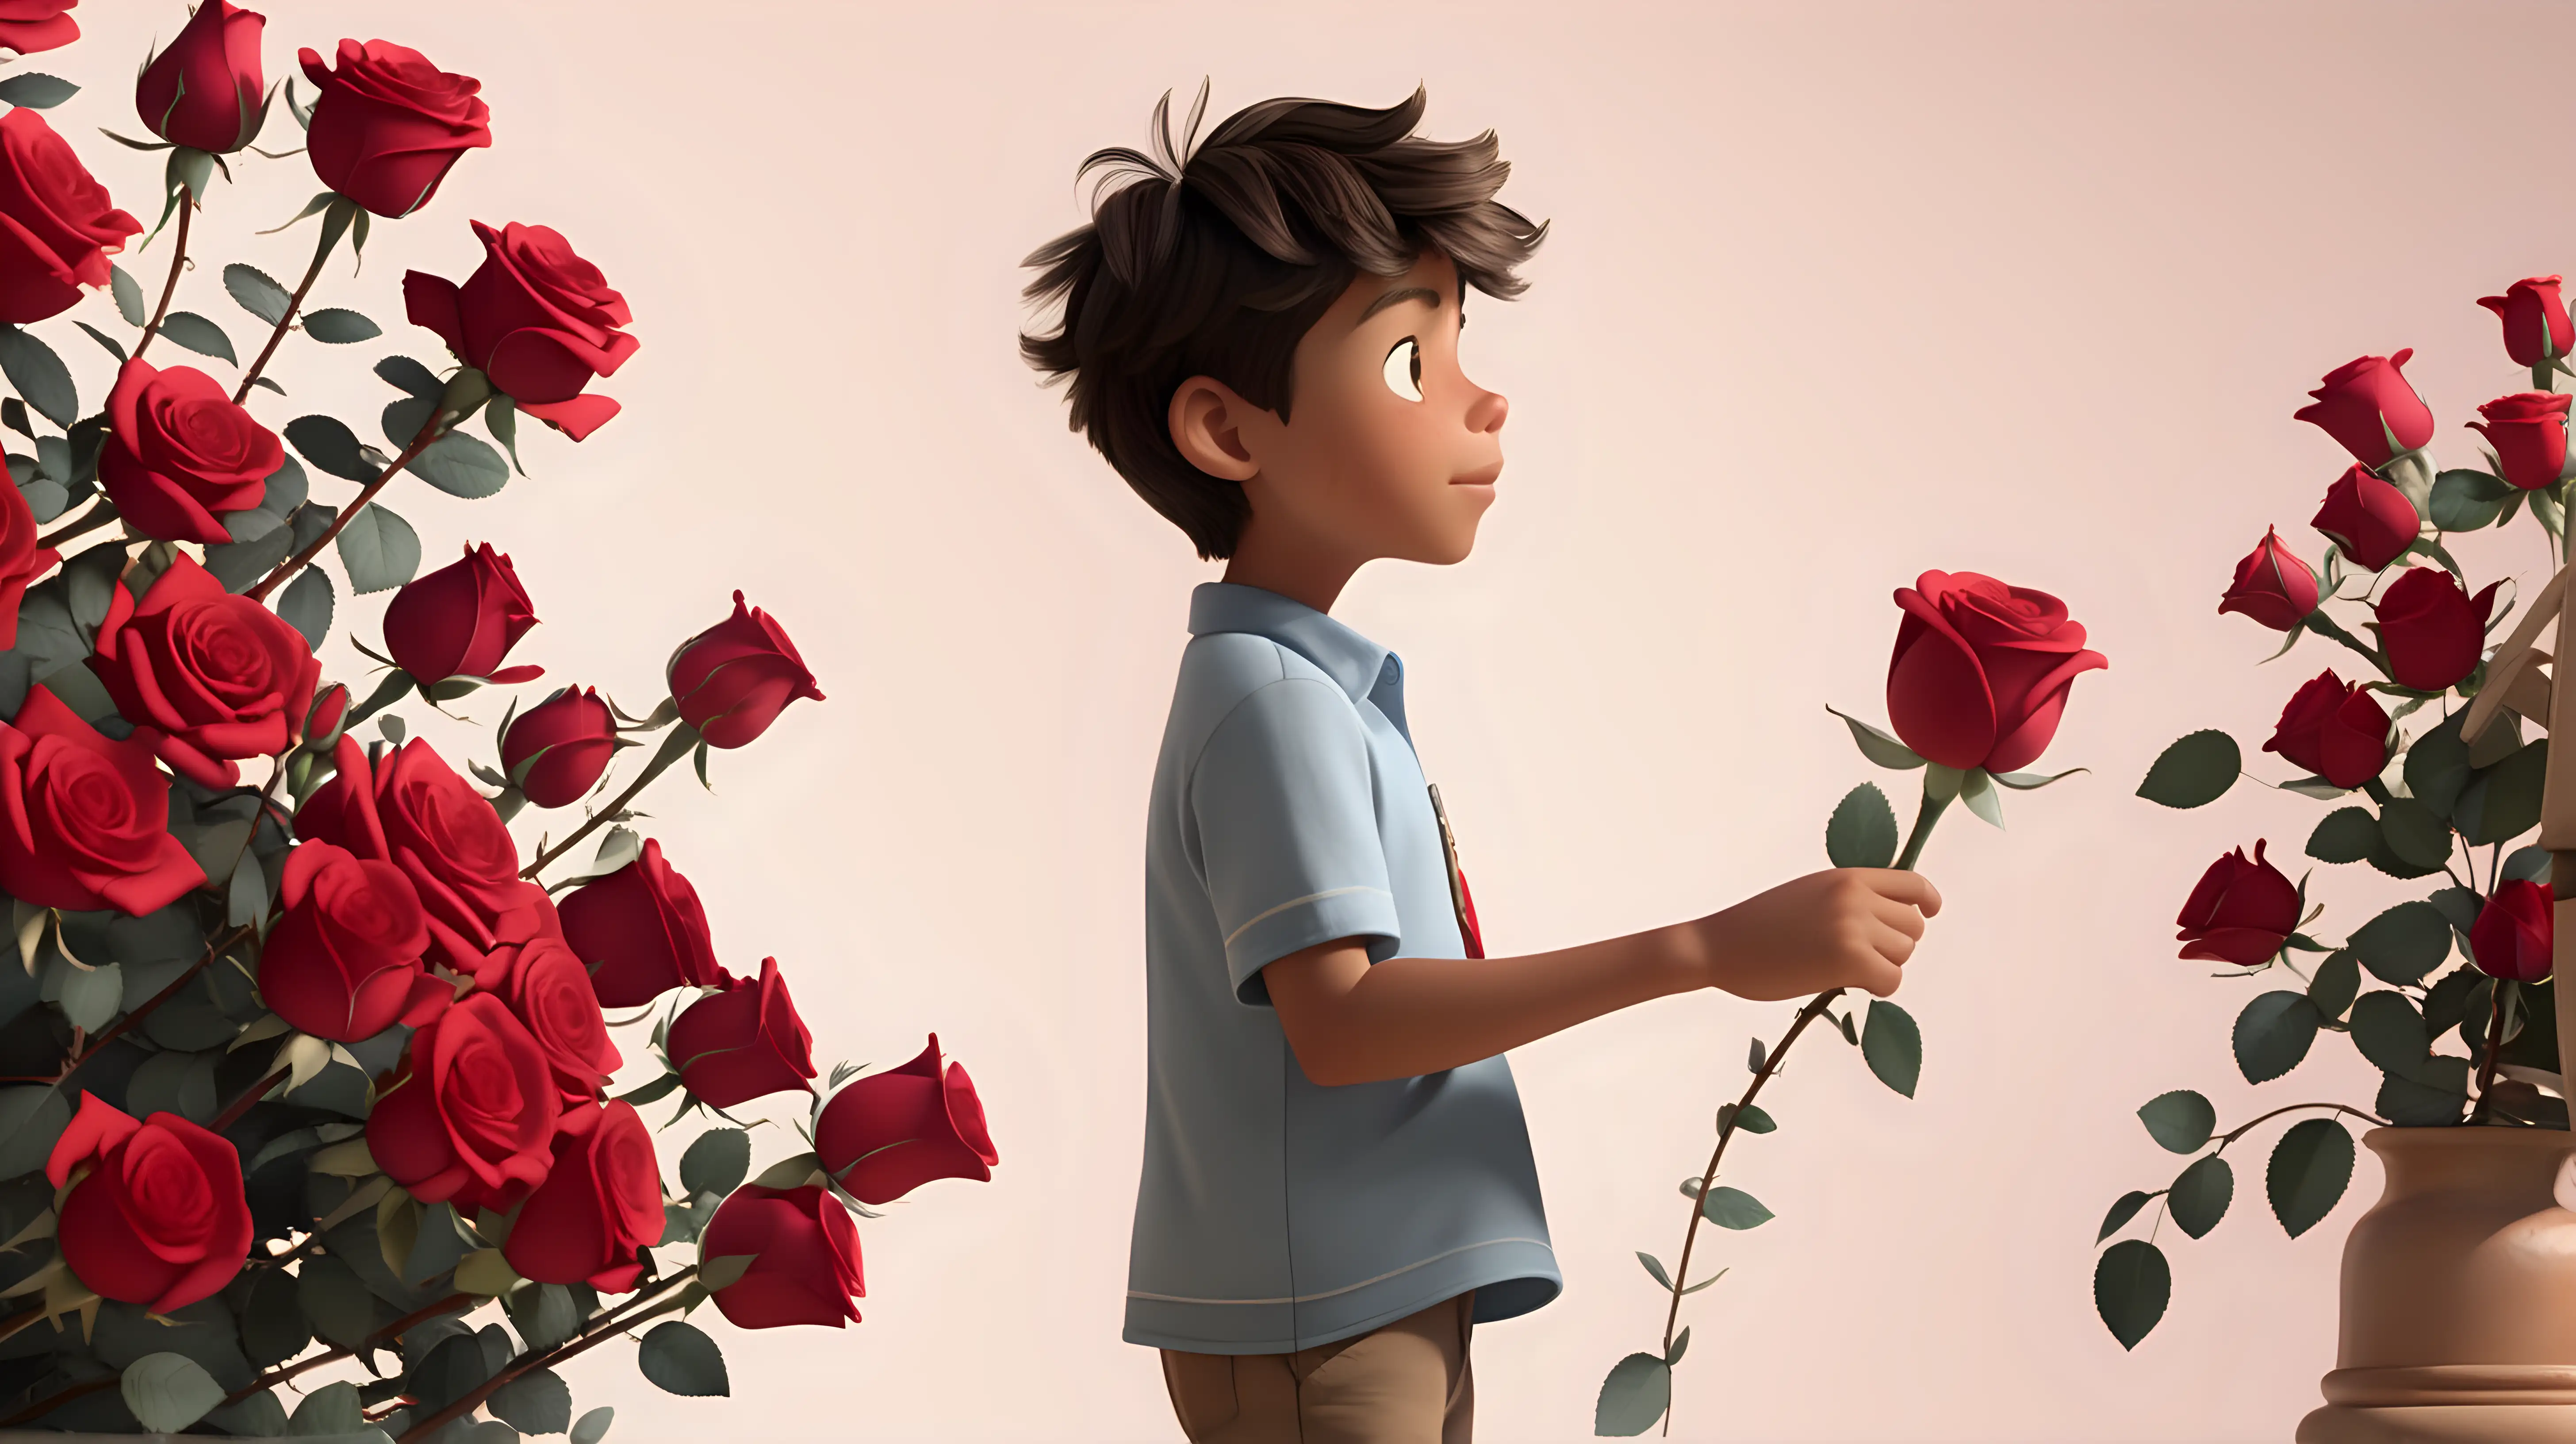 Heartfelt Quest Animated Boy Seeking the Perfect Rose